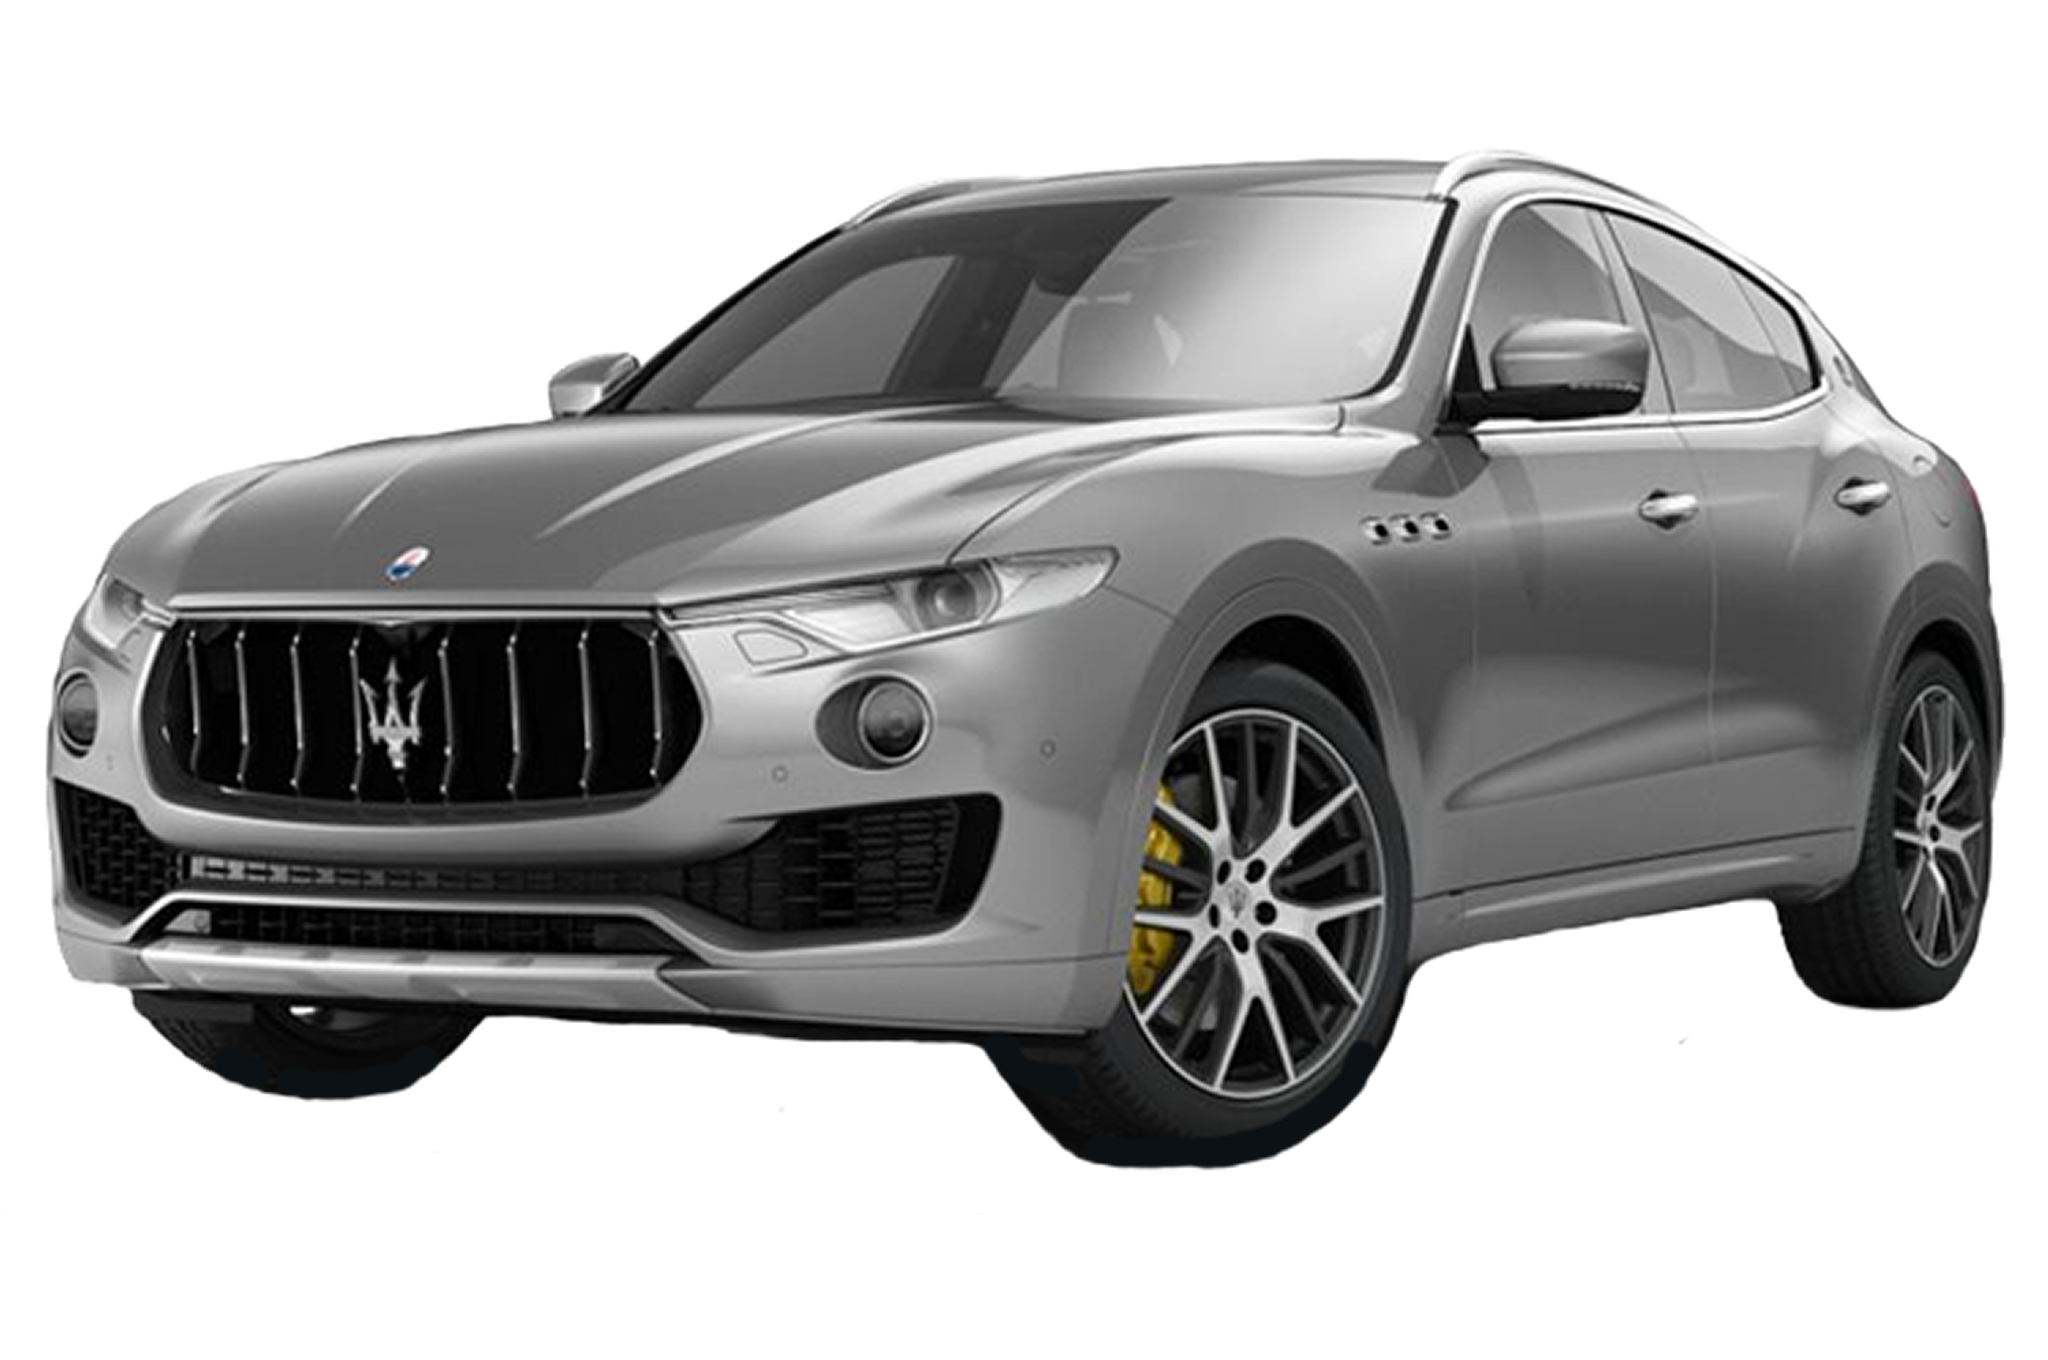 Download Granturismo Maserati Rim 2018 Vehicle Levante Luxury Hq Png Image Freepngimg